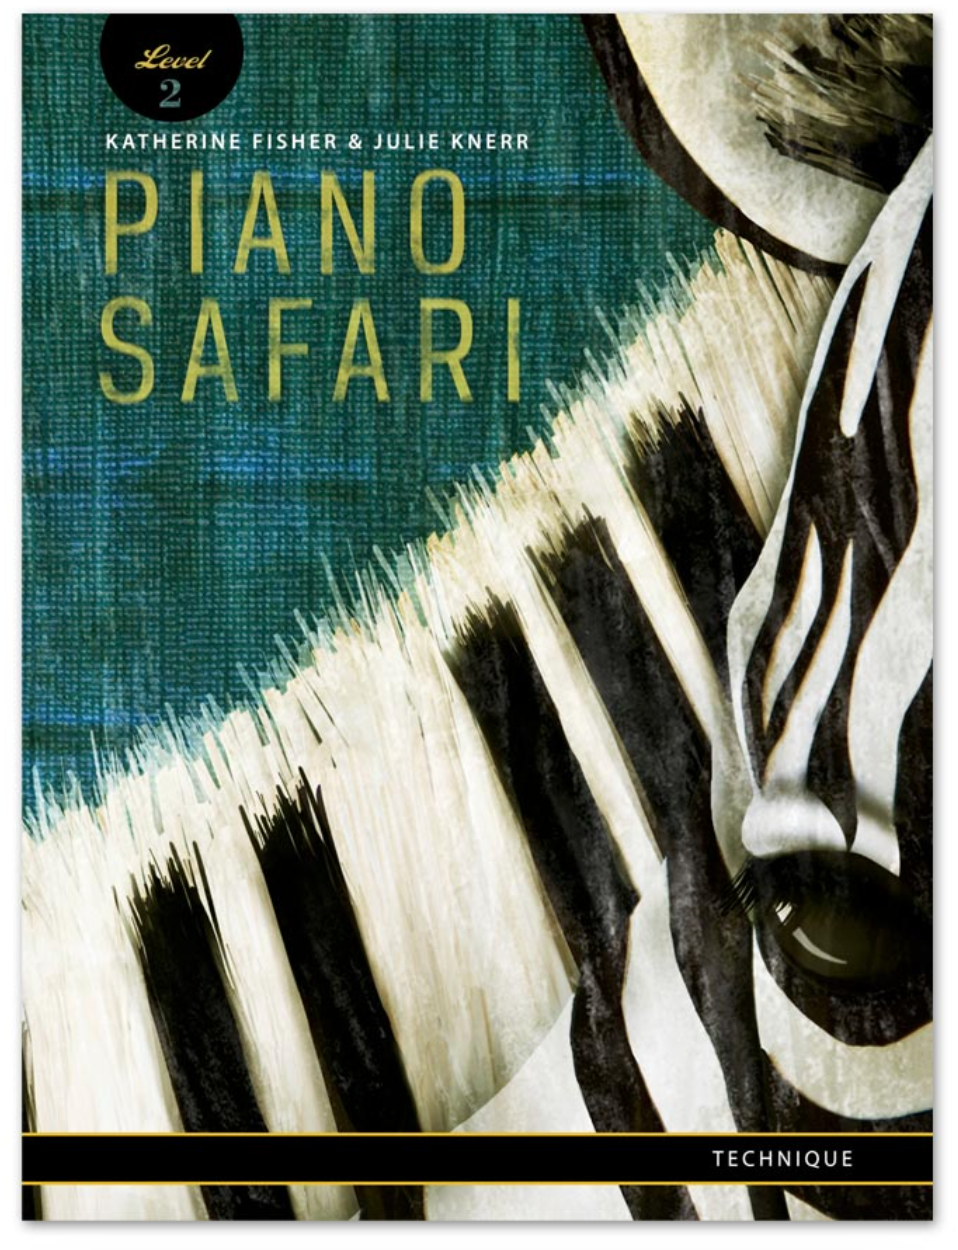 Piano Safari Technique 2 - Fisher Katherine; Hague Julie Knerr Piano Safari PNSF1008